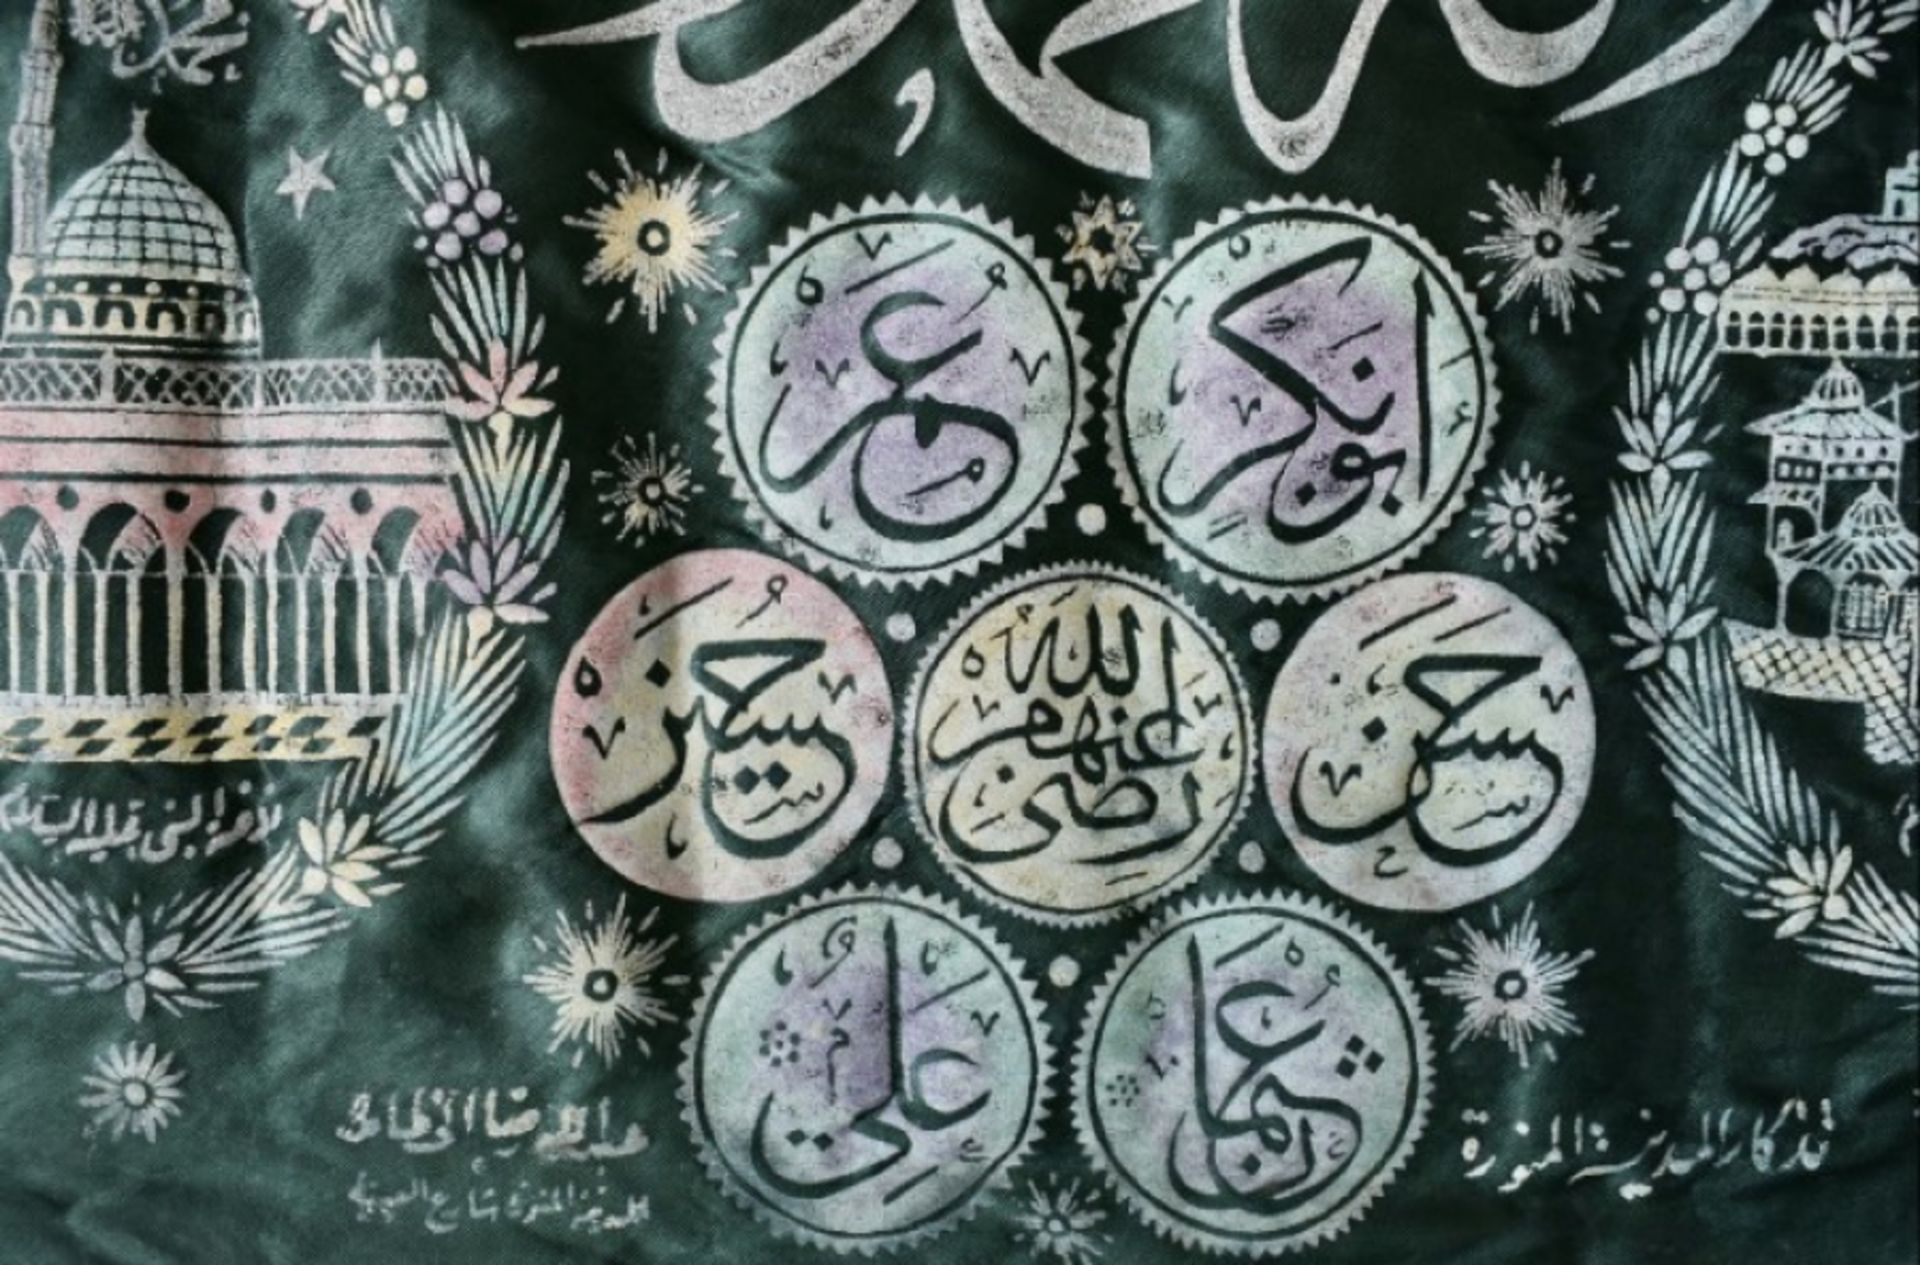 Mecca pilgrimage souvenir - Image 4 of 14